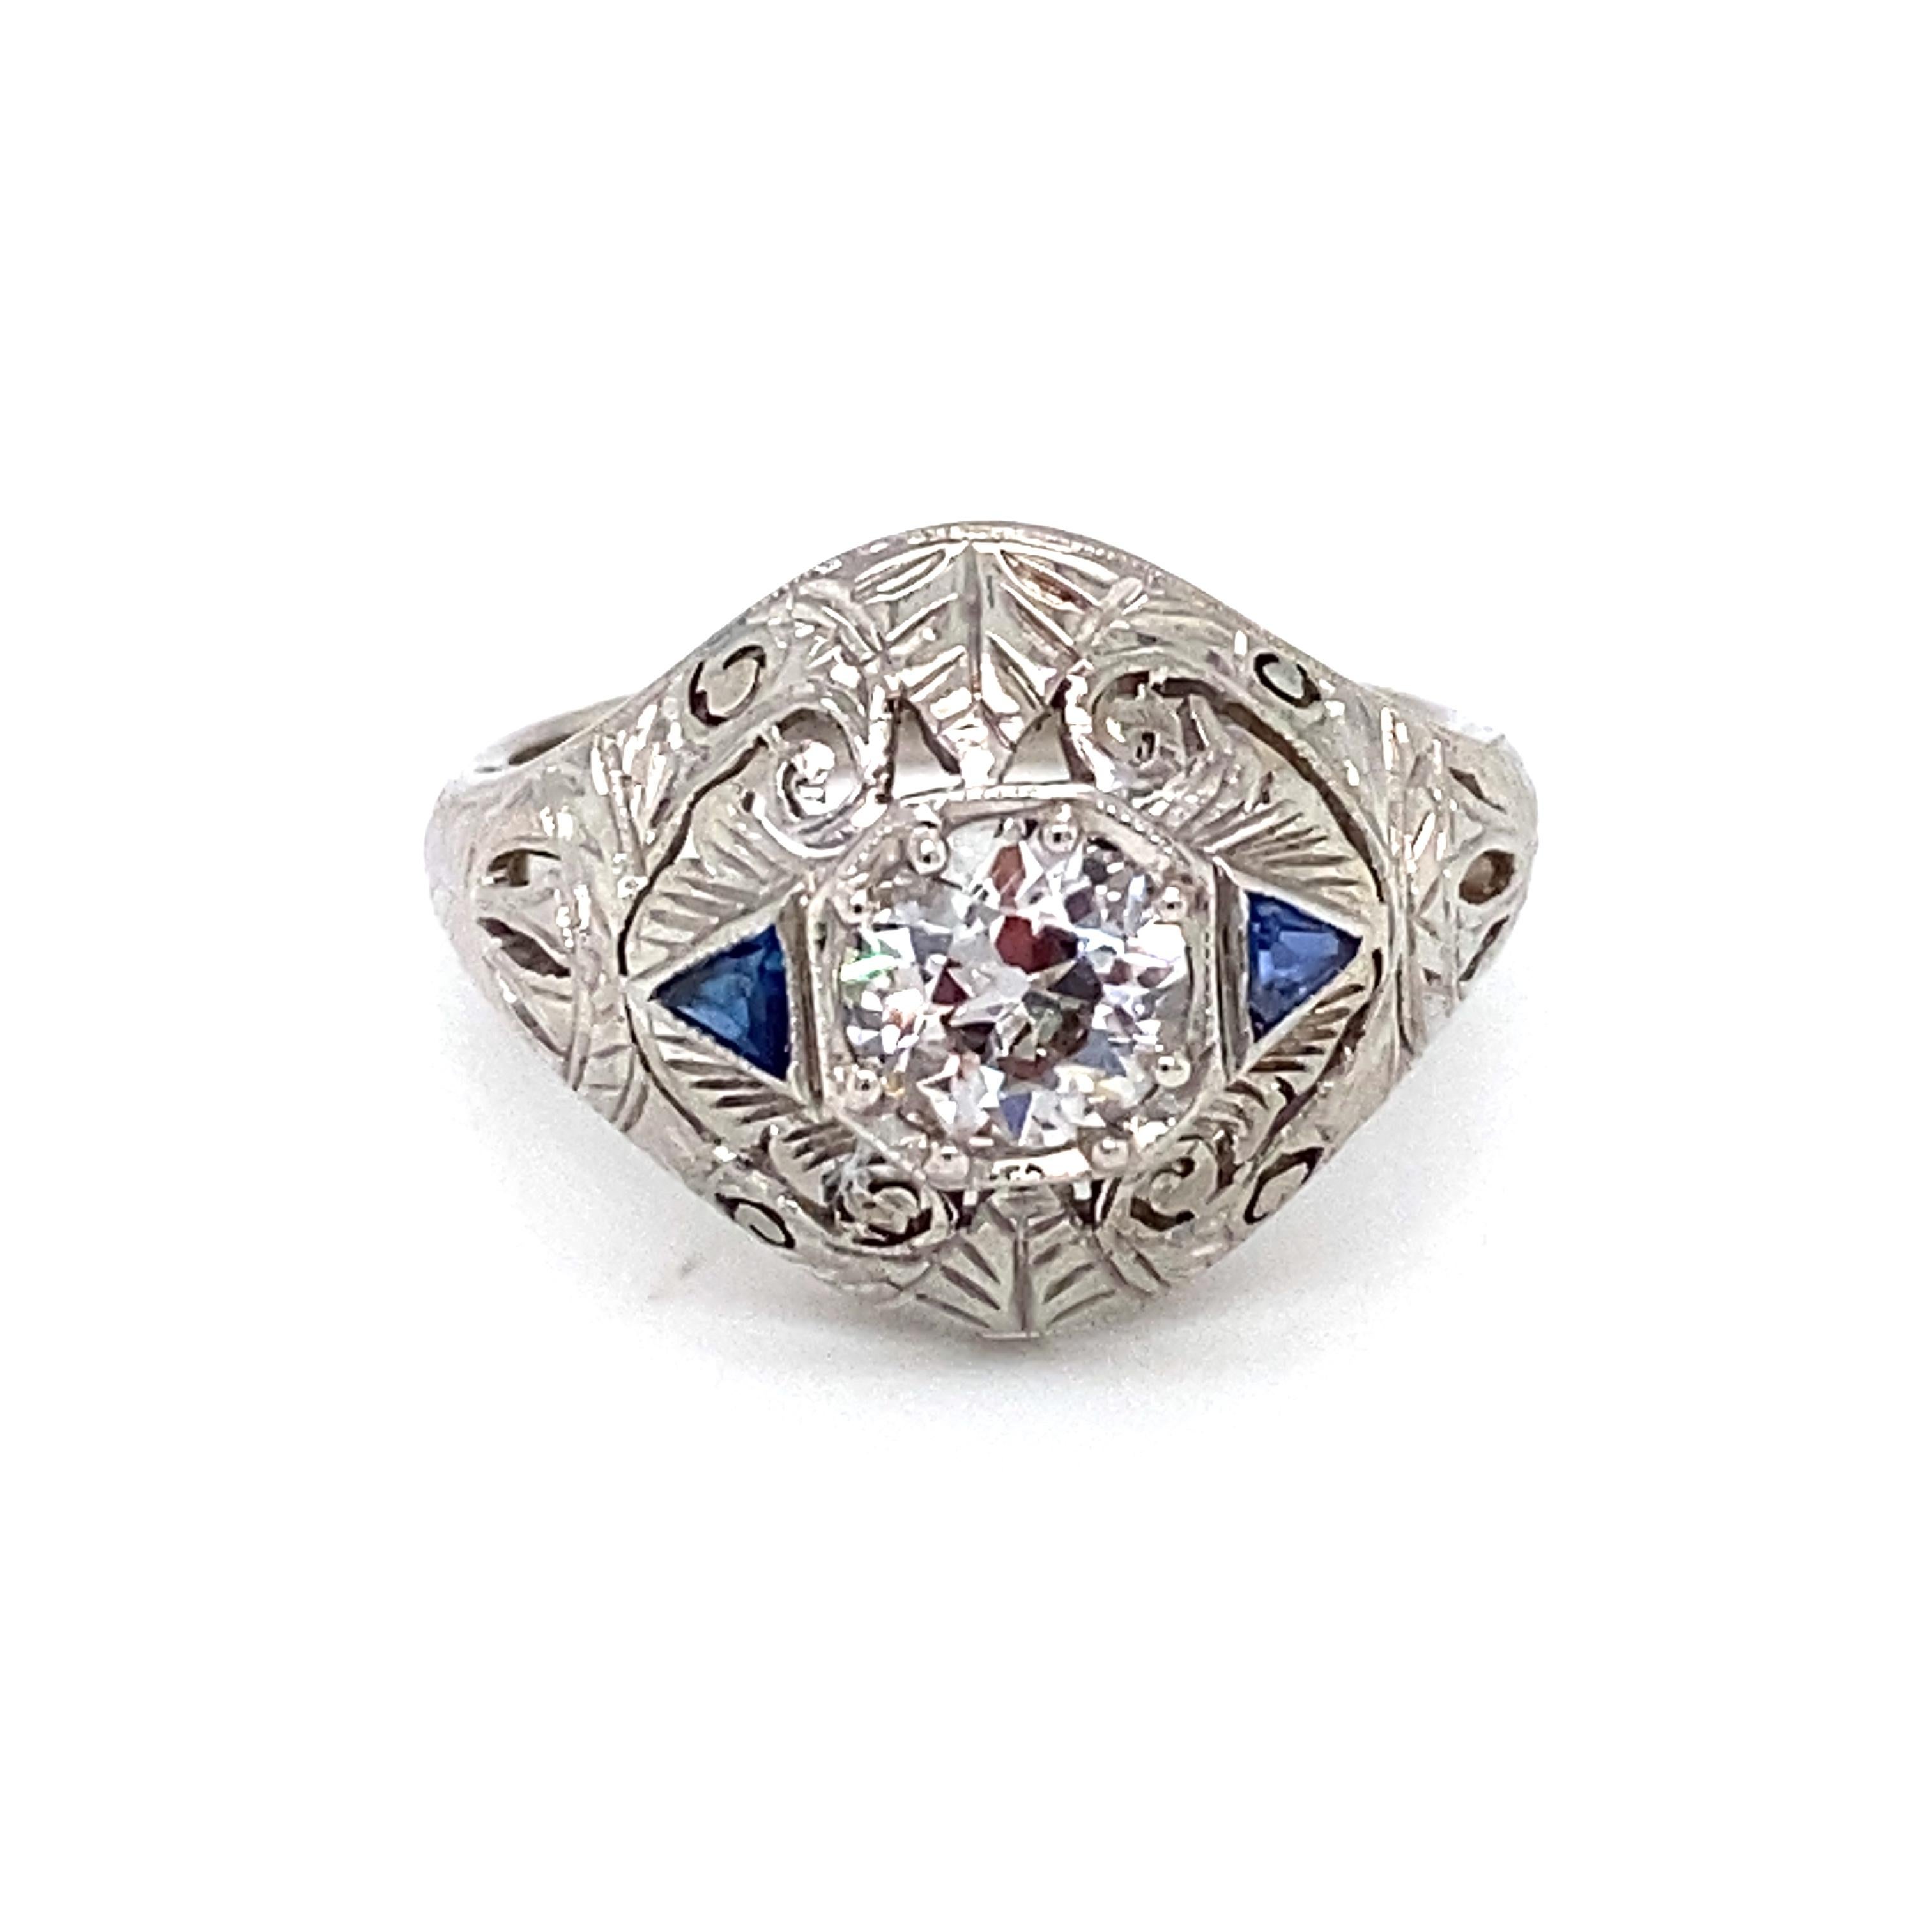 Old European Cut Circa 1920s Art Deco 0.65 Carat Diamond and Sapphire Ring in Platinum For Sale